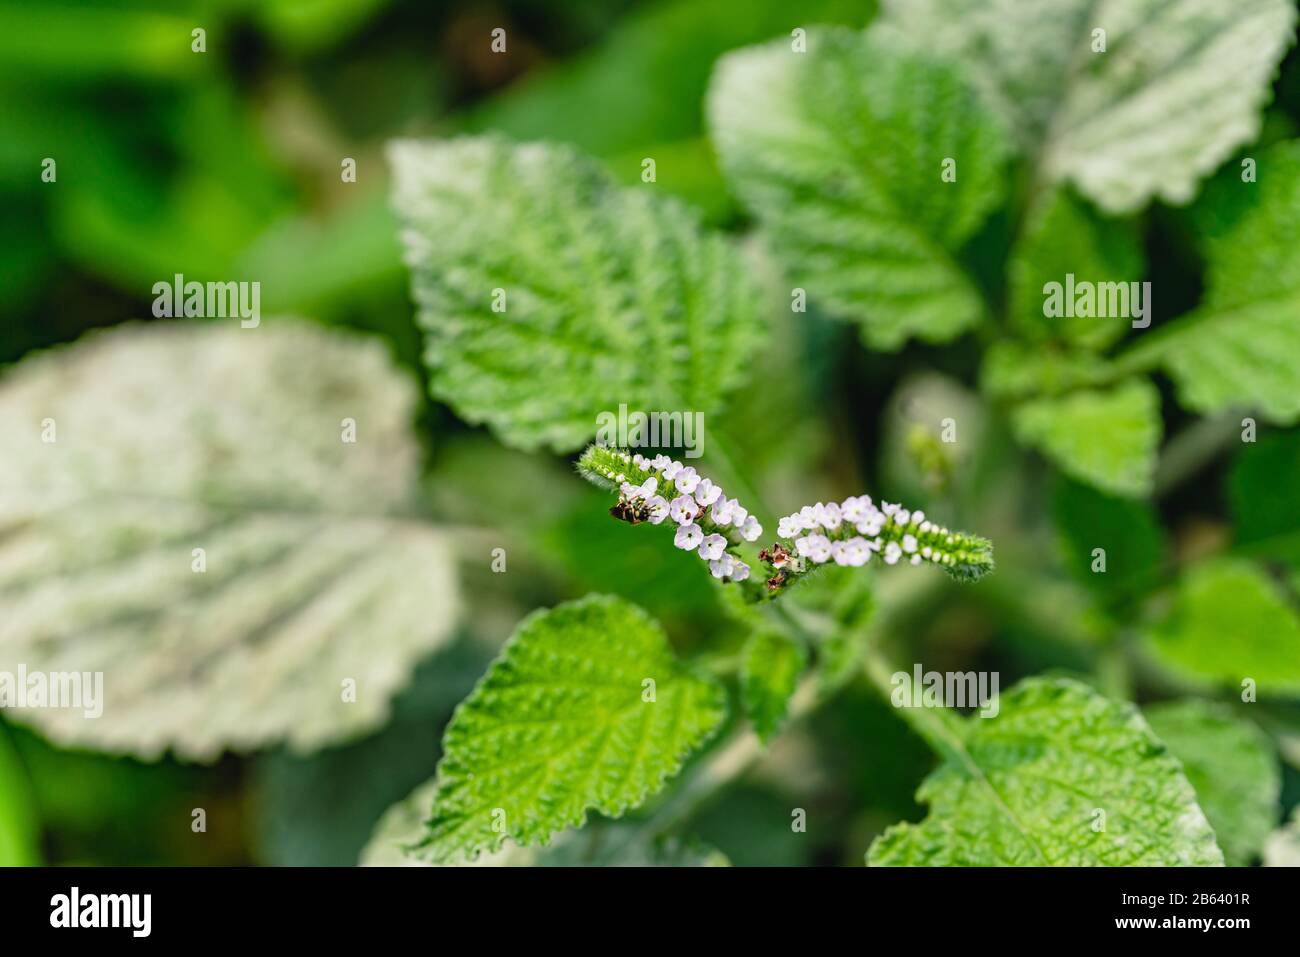 Powdery mildew, a garden fungus disease, on green leaves. Stock Photo